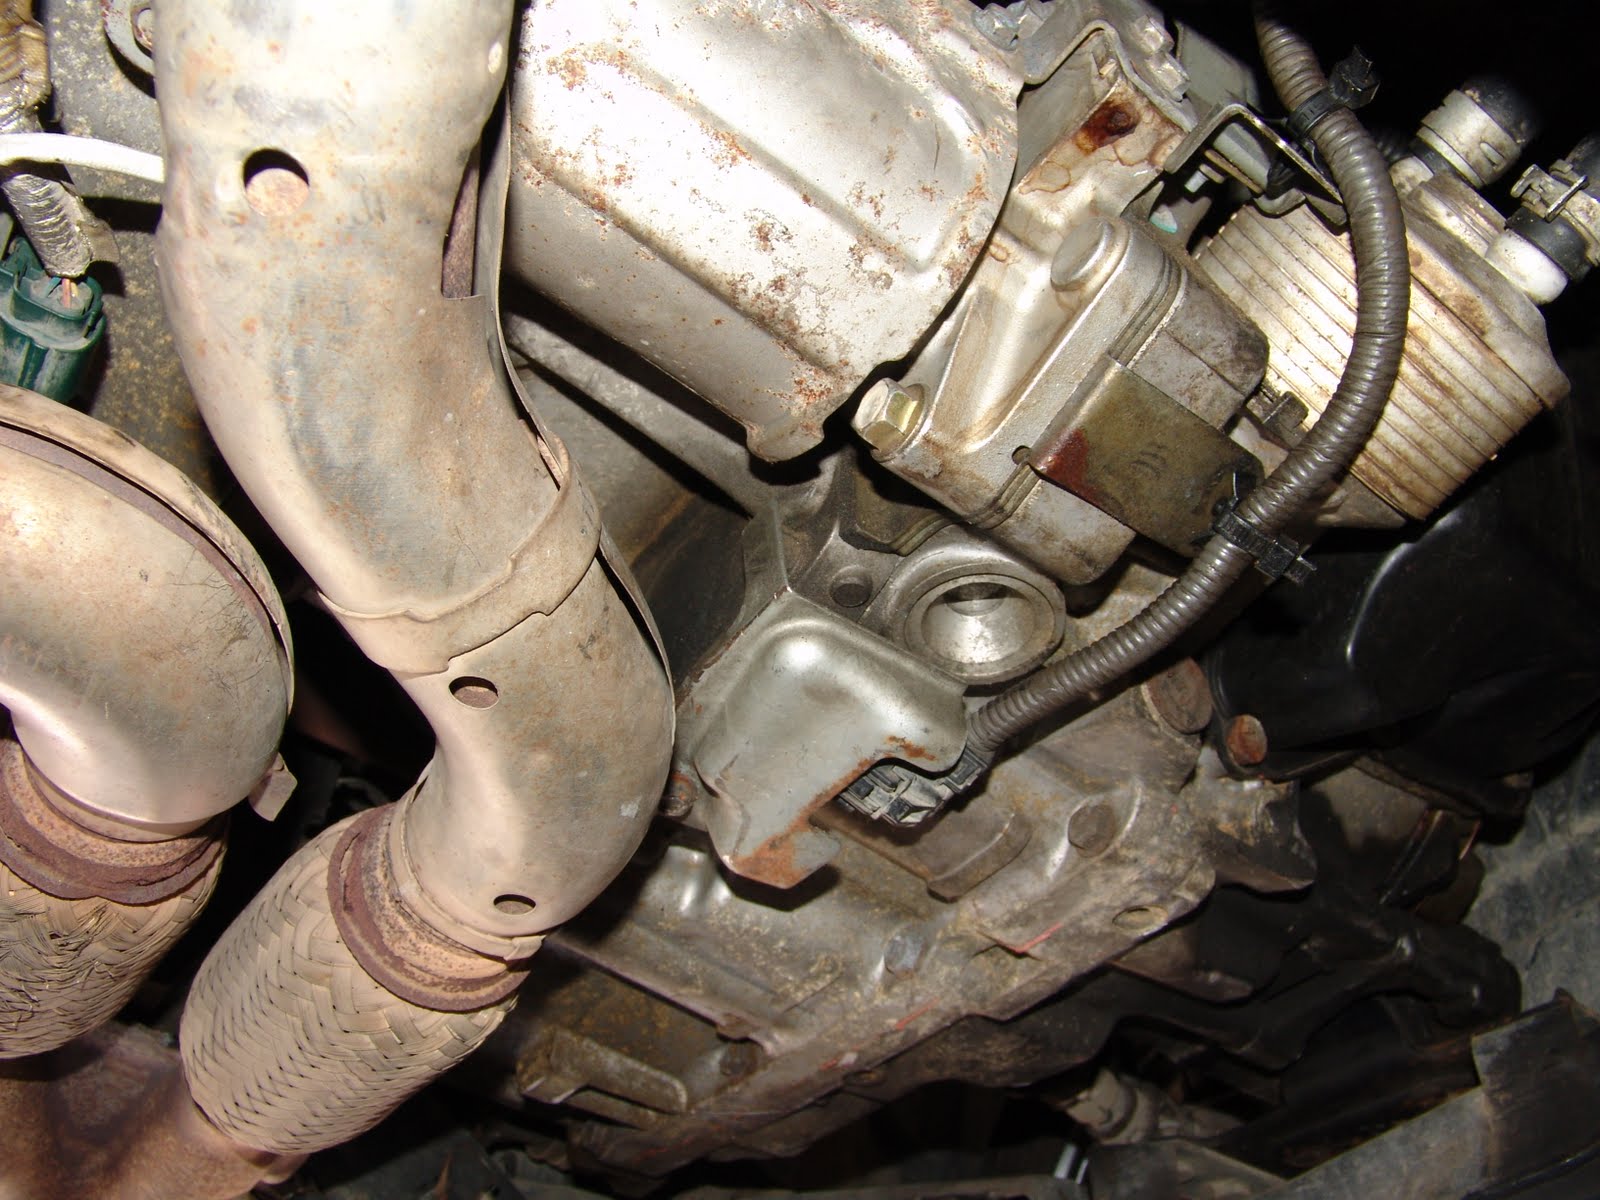 2004 Nissan maxima transmission repair